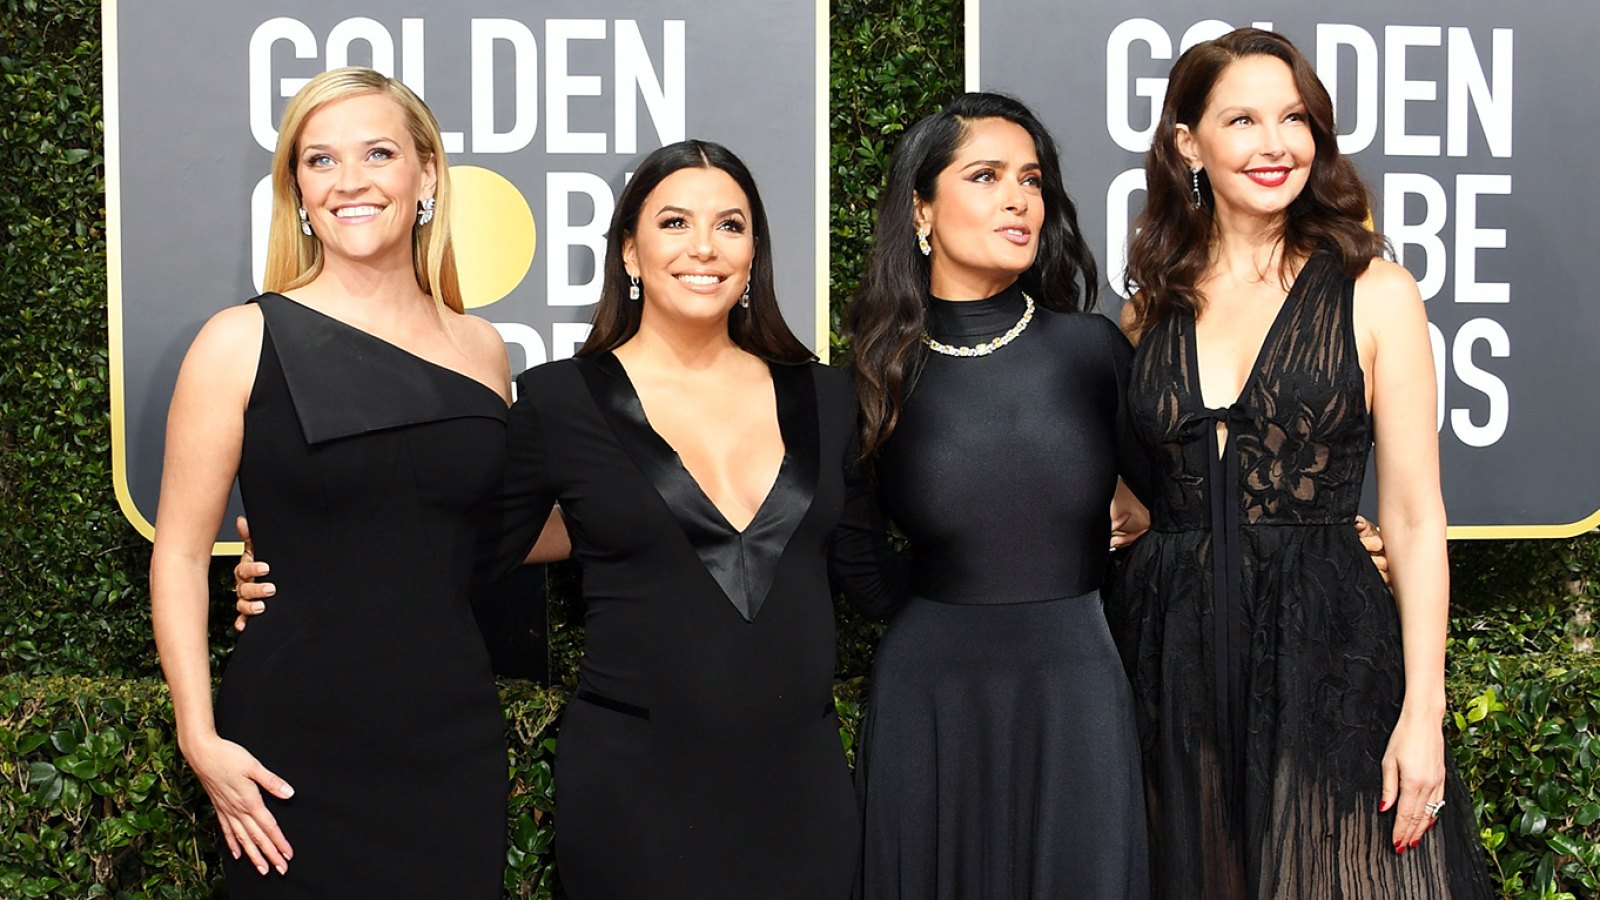 Reese Witherspoon Eva Longoria Salma Hayek Ashley Judd Golden Globes 2018 Times Up